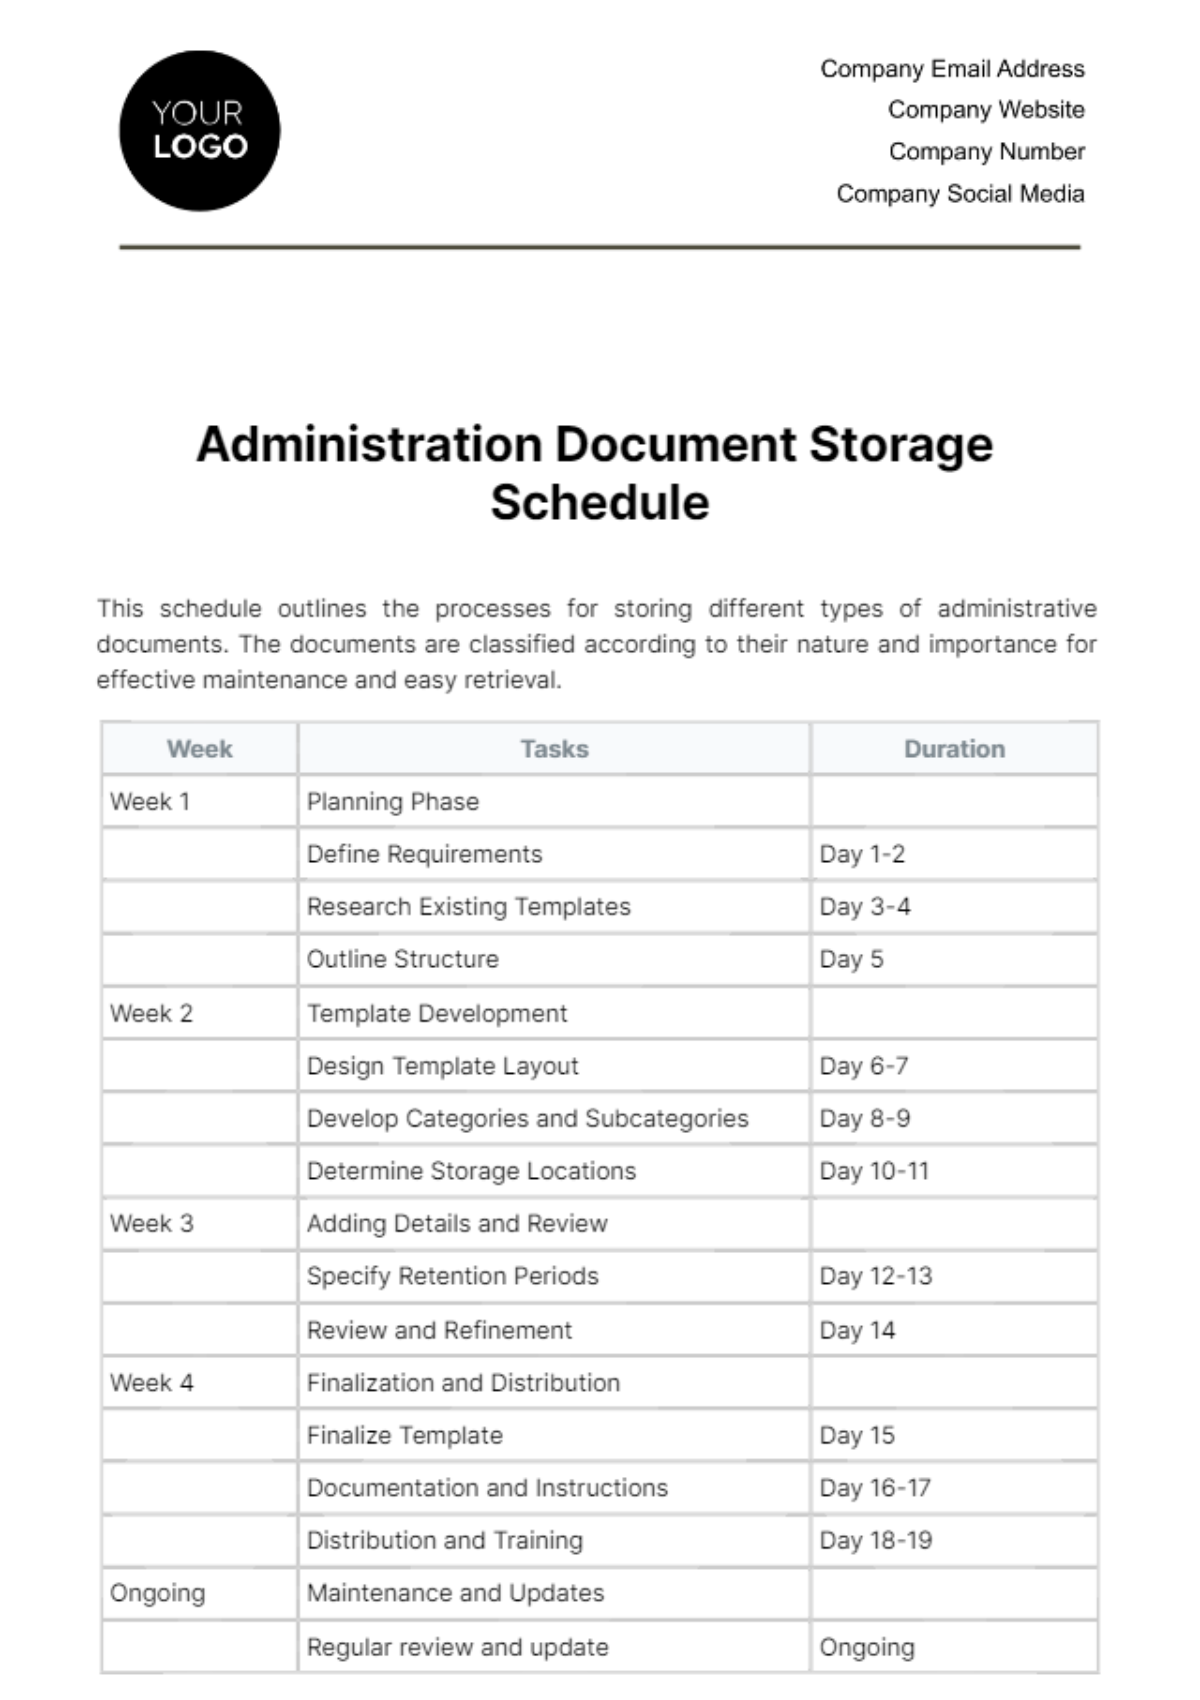 Administration Document Storage Schedule Template